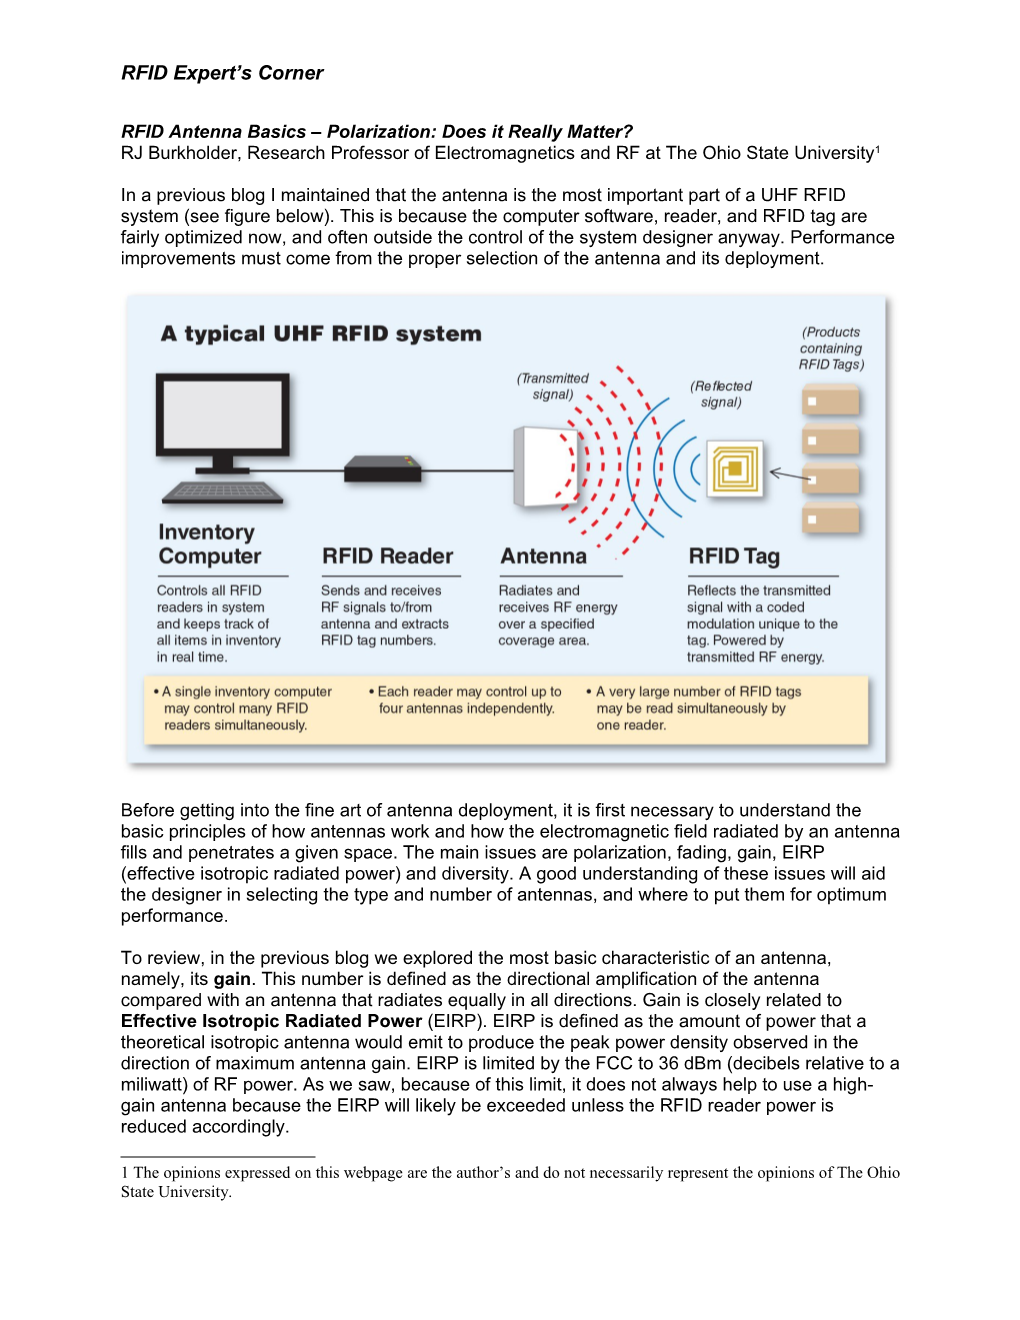 RFID Antenna Basics Polarization: Does It Really Matter?